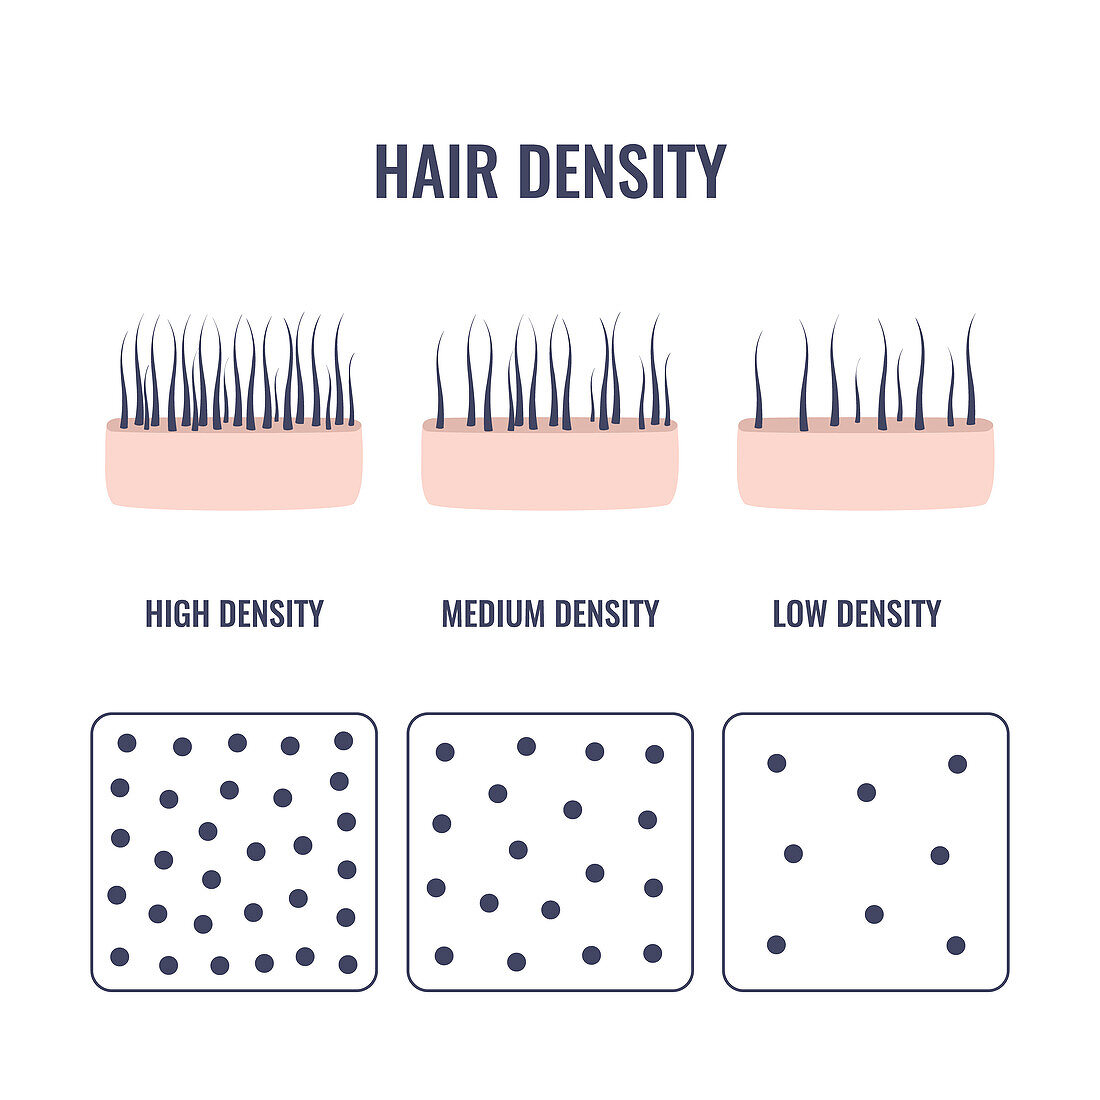 Hair density types, conceptual illustration